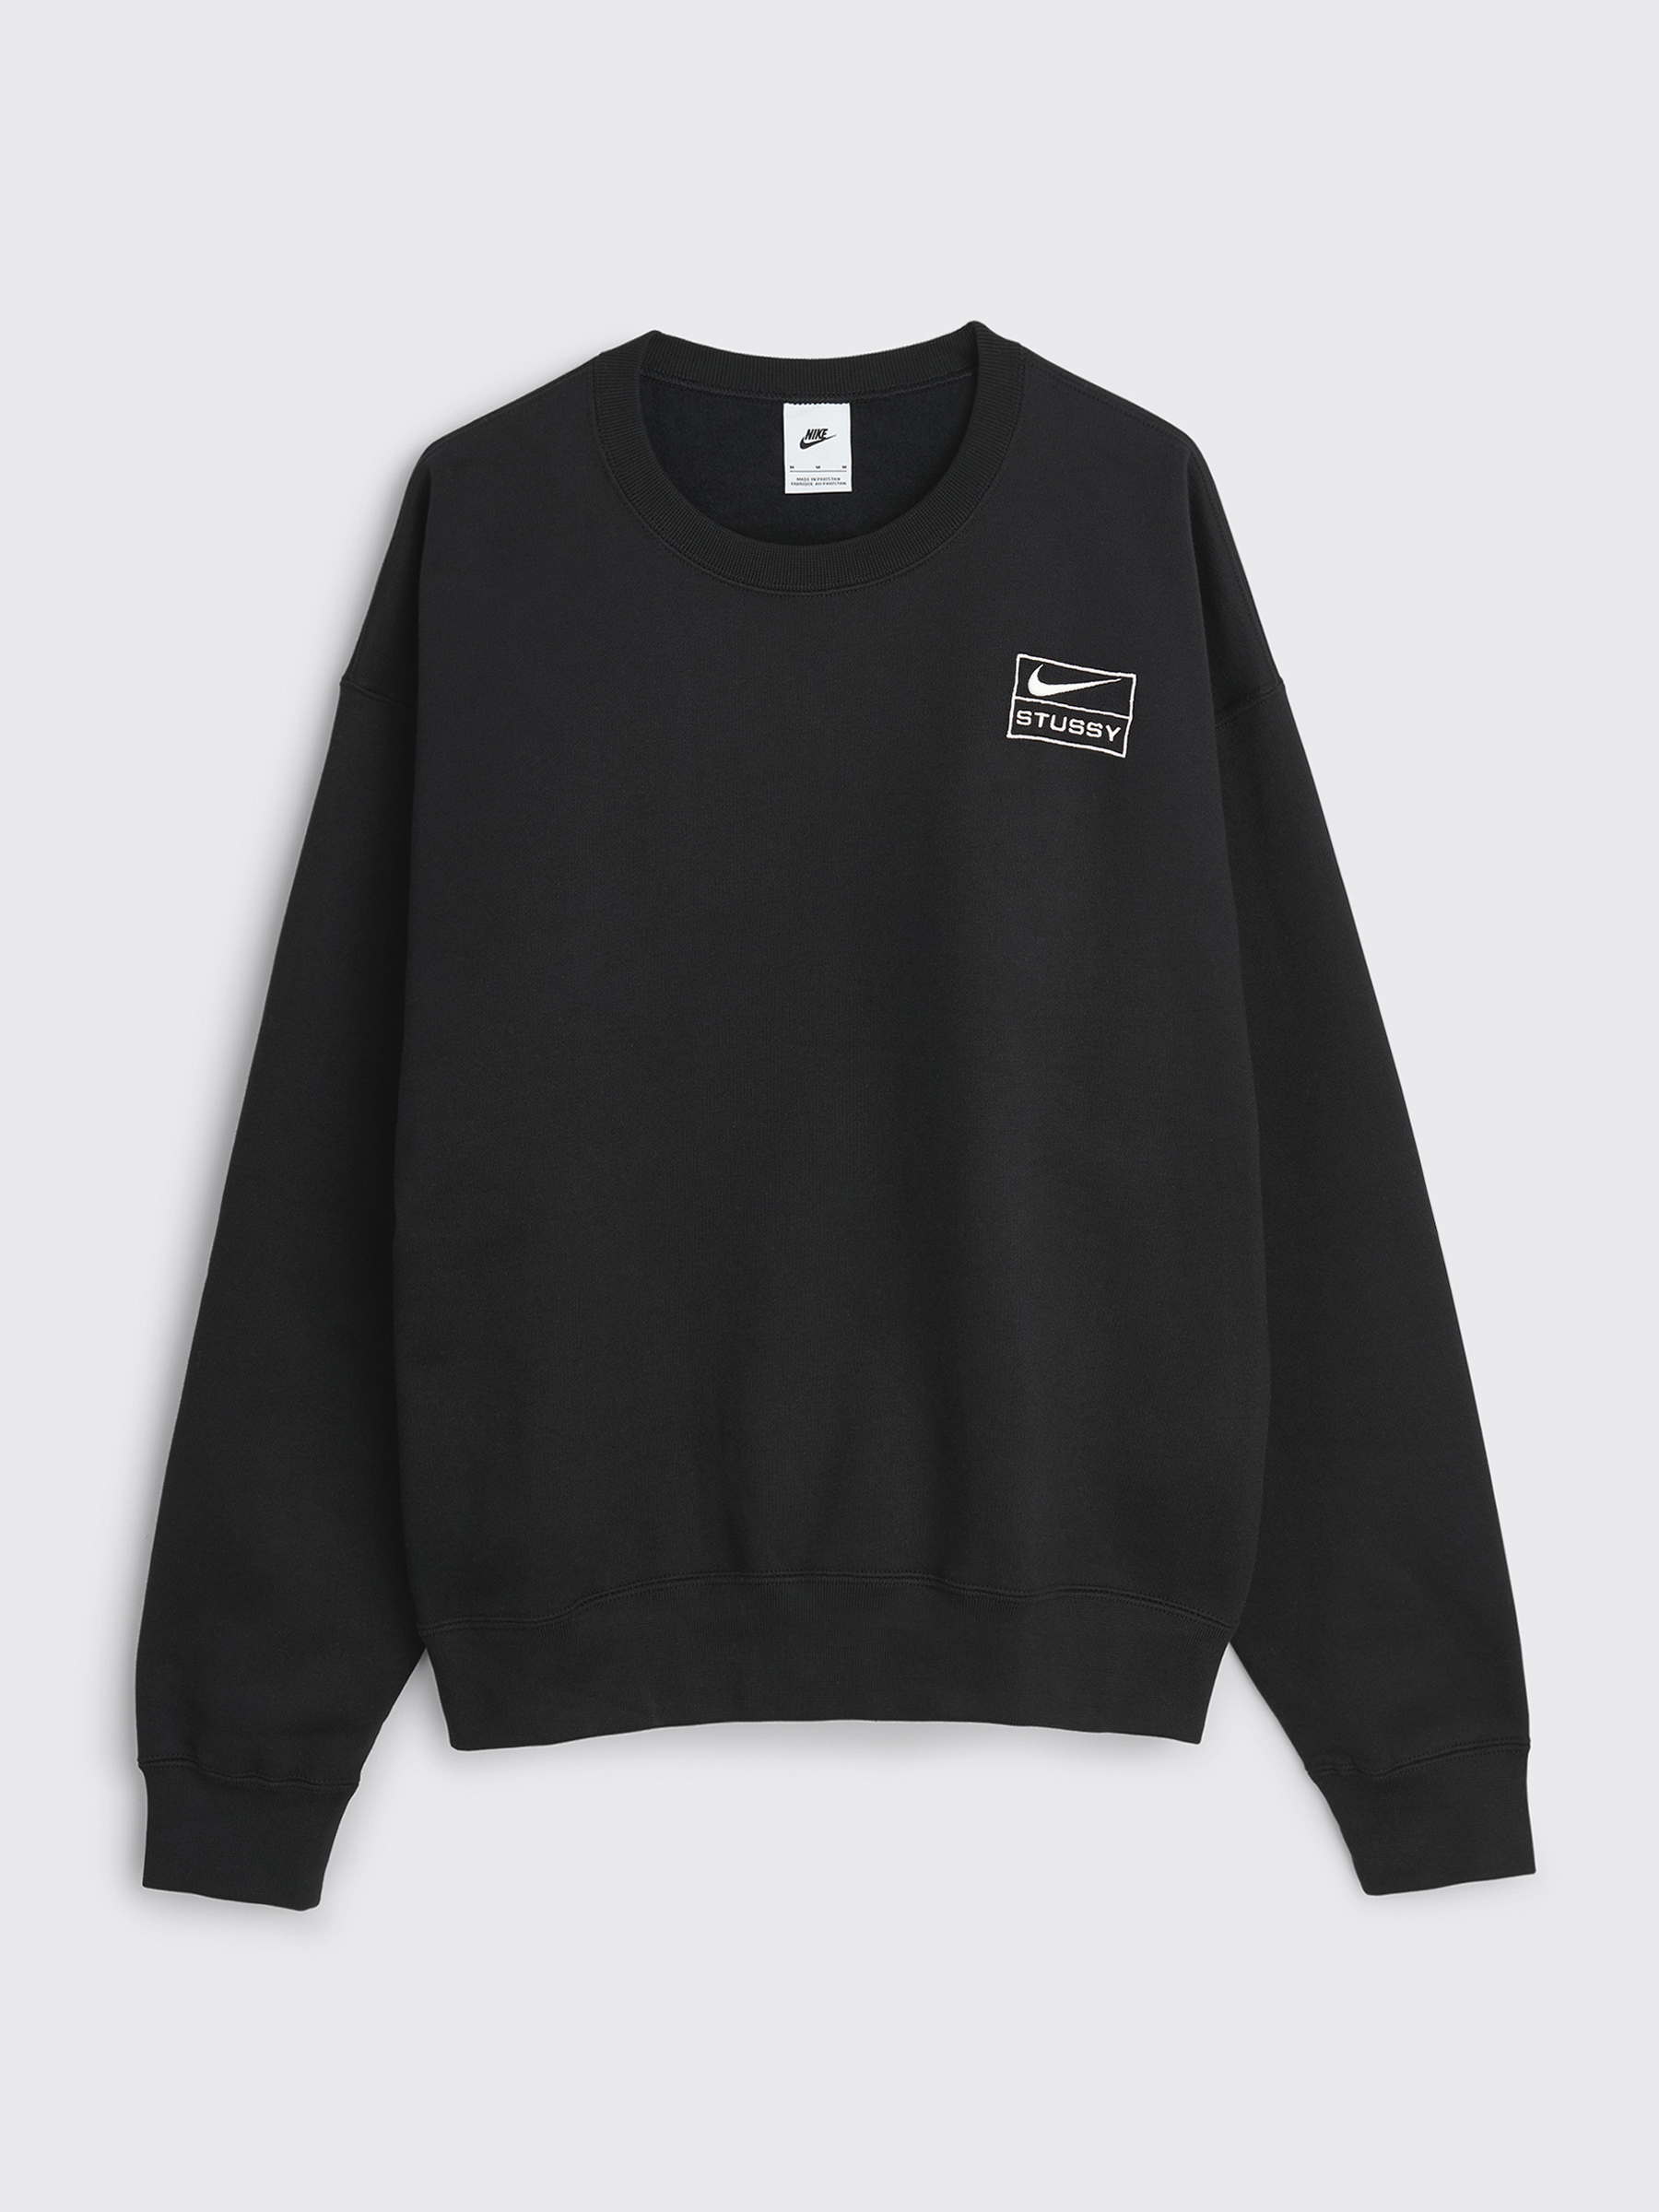 Très Bien - Nike x Stüssy Washed Fleece Crew Sweater Black